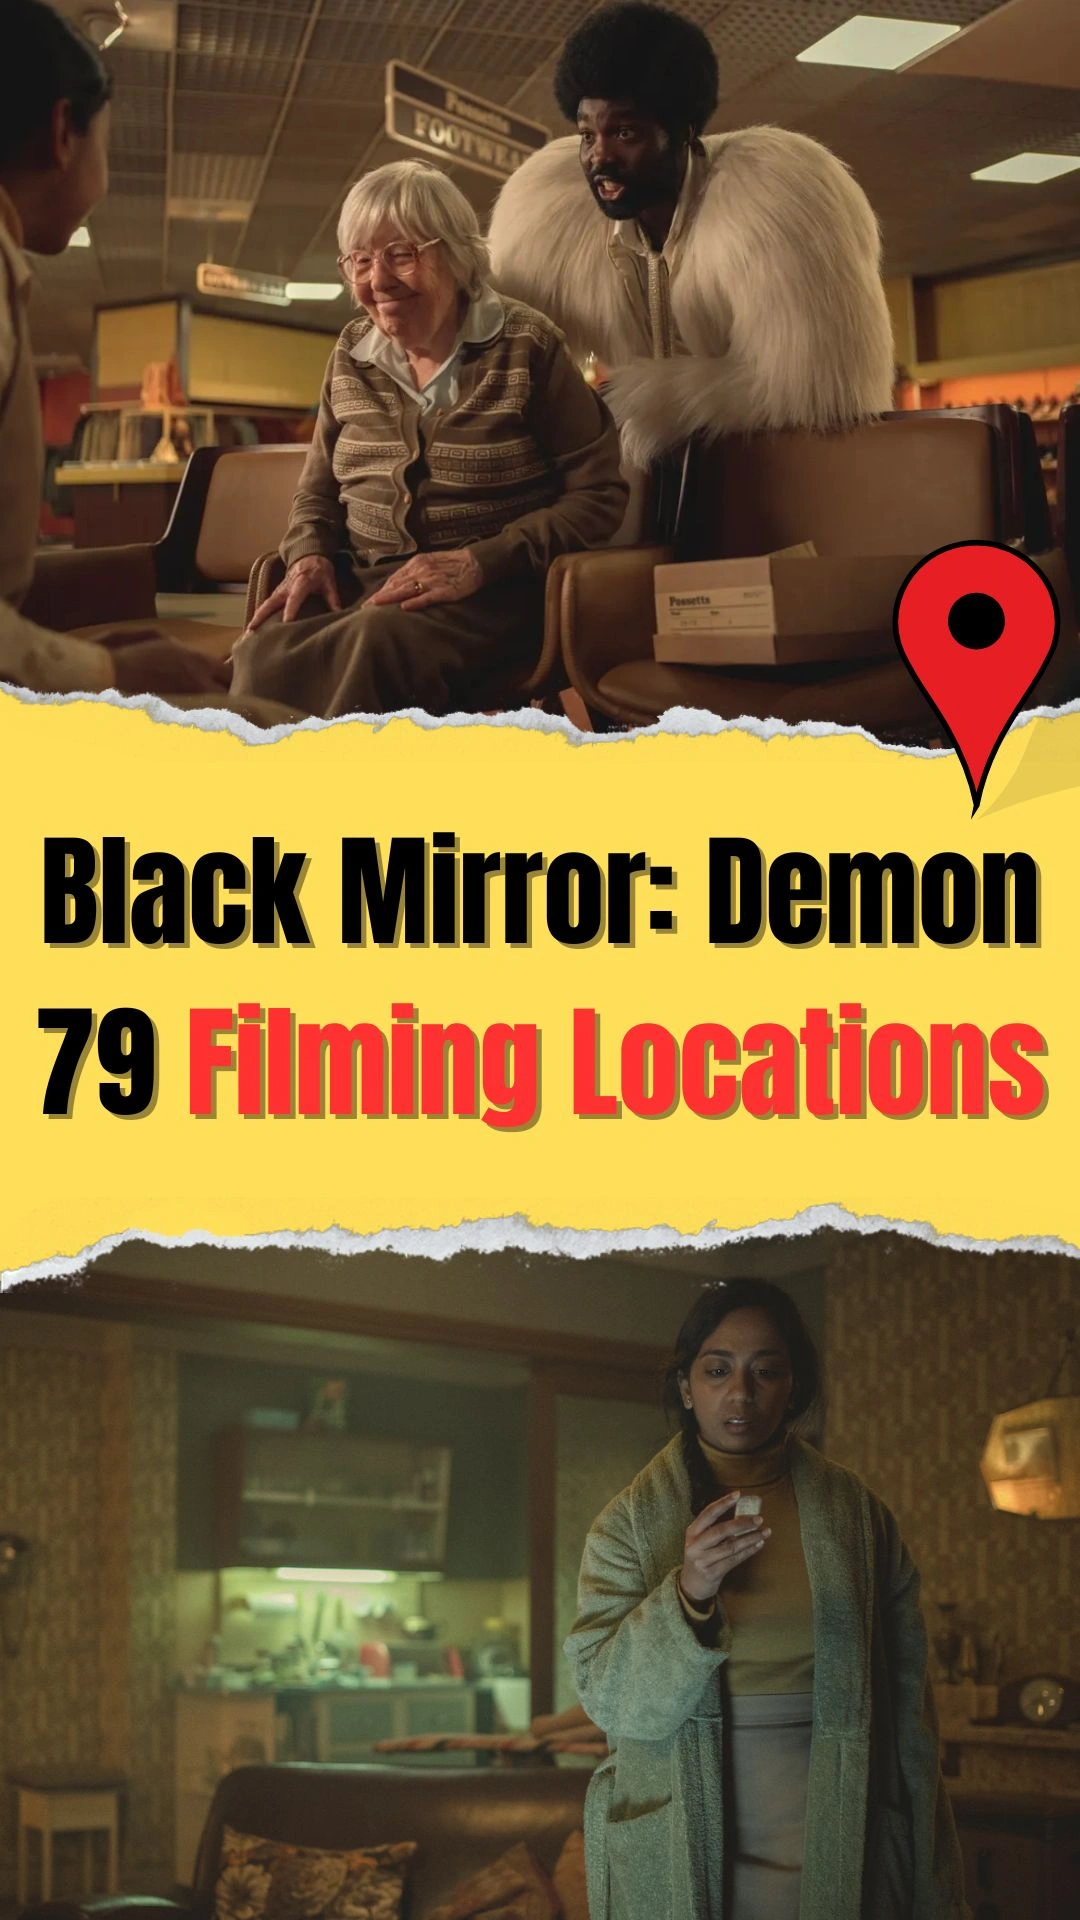 Black Mirror Demon 79 Filming Locations